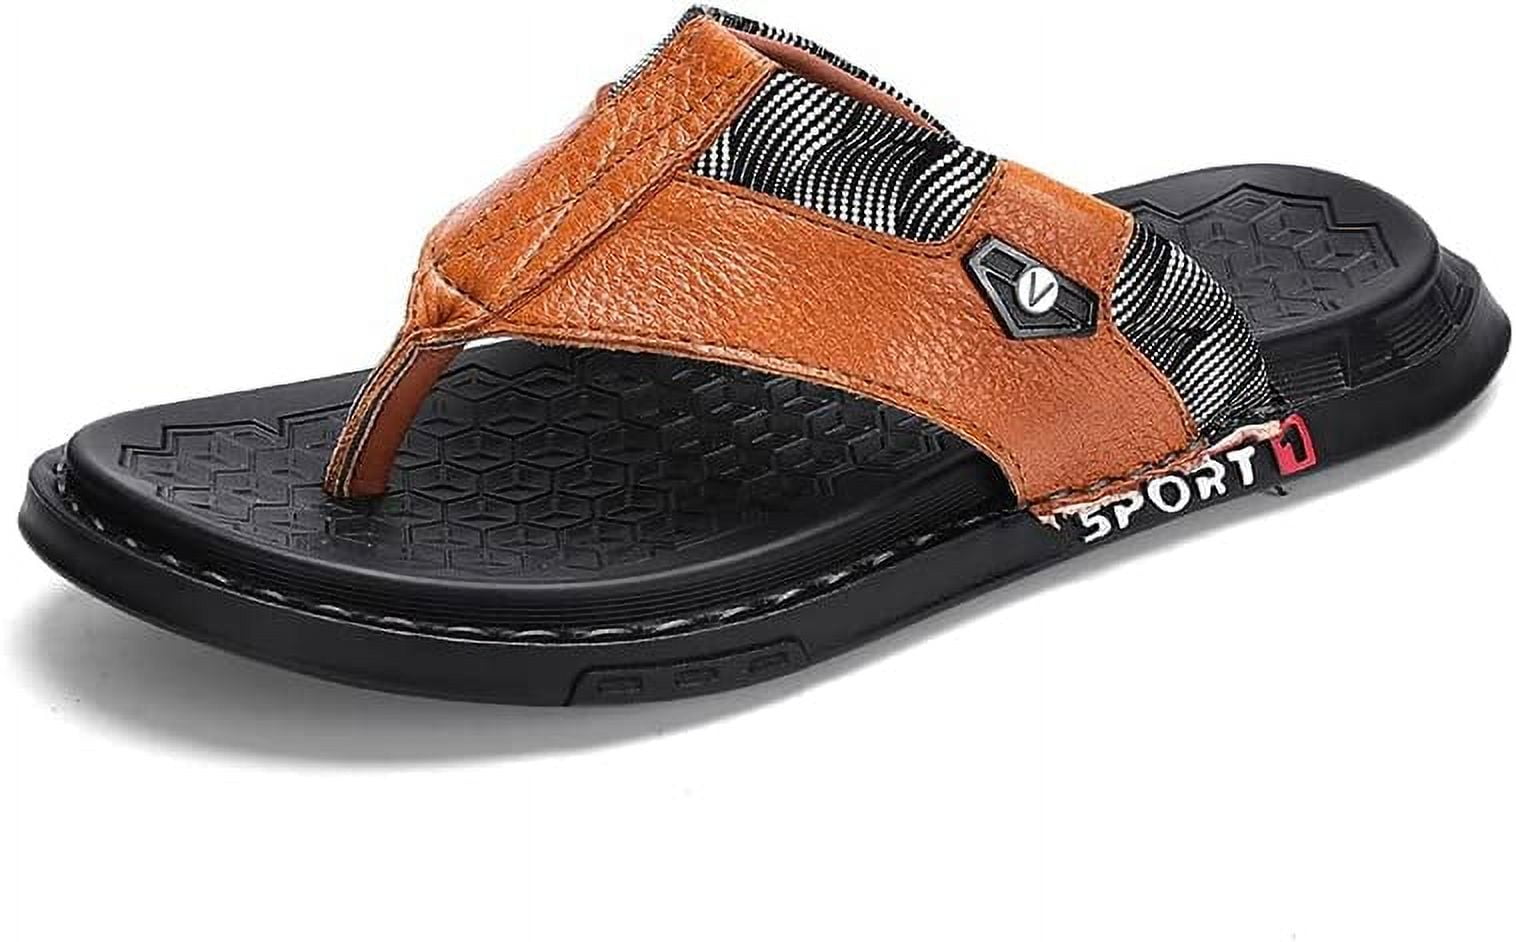 CAMEL CROWN Men's Waterproof Hiking Sandals Closed Toe Athletic Sport  Sandals No | eBay